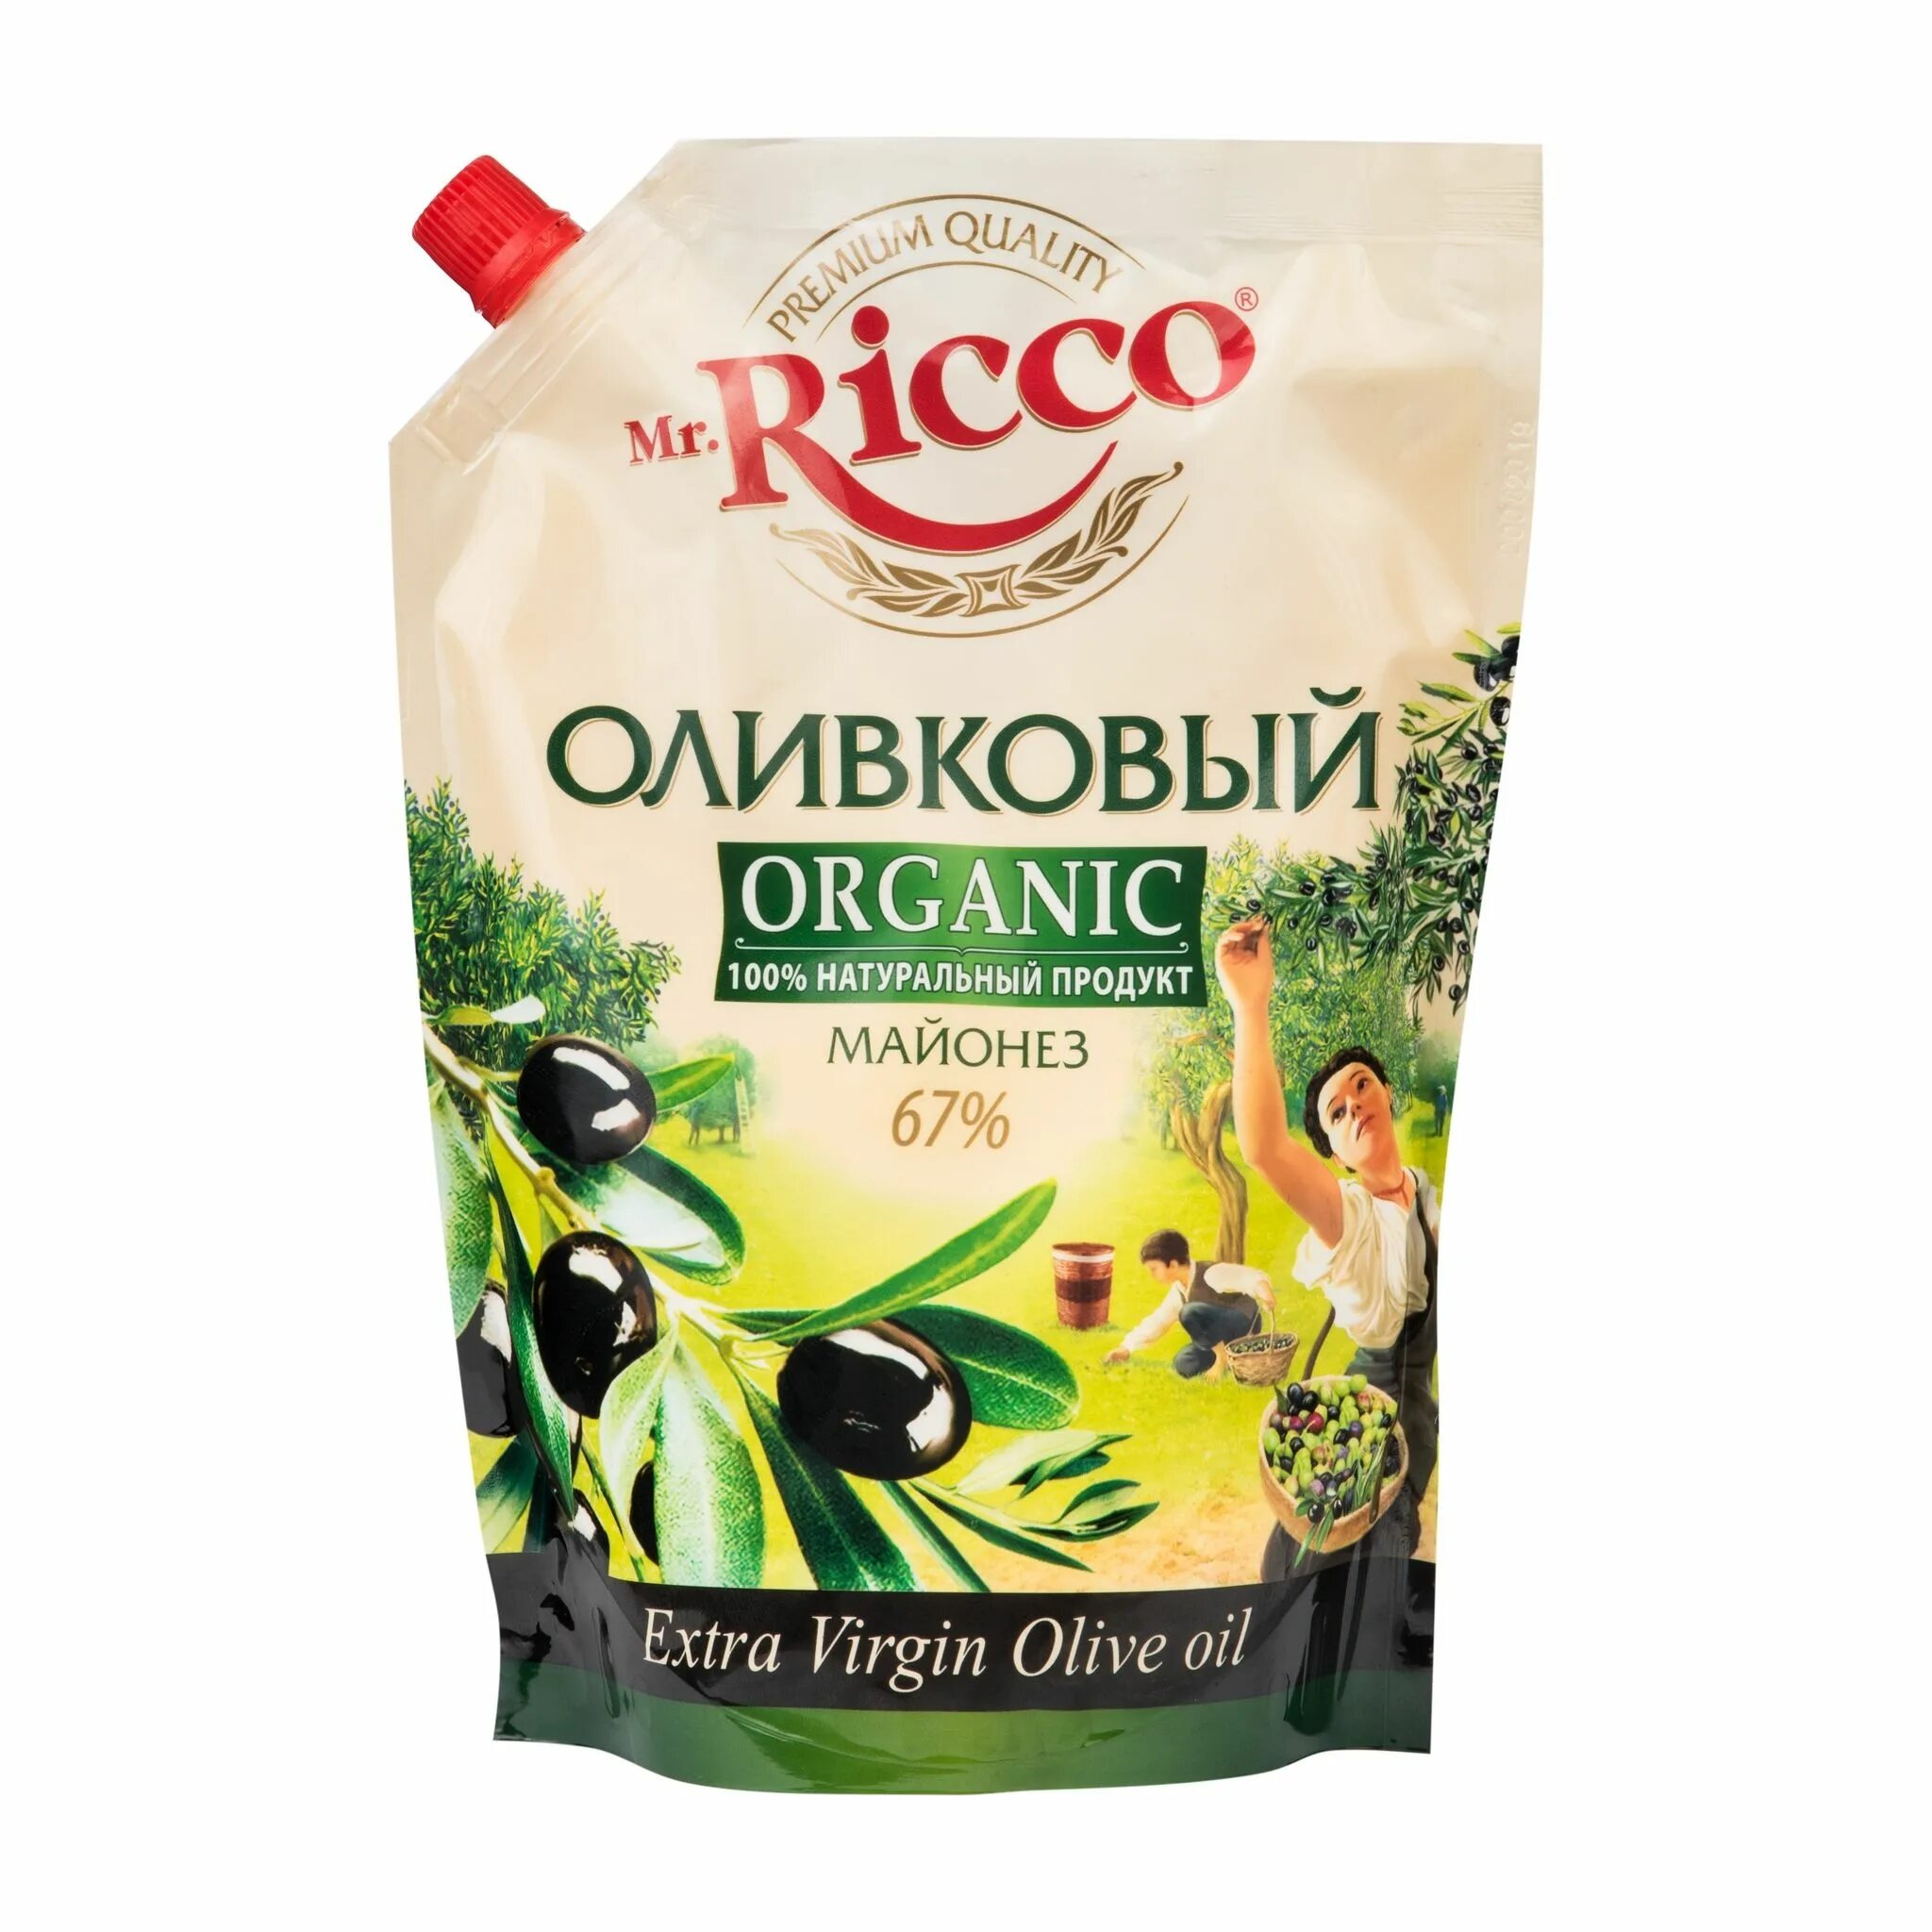 Майонез колбасный. Майонез Mr.Ricco " оливковый" Organic 67% 800мл. Майонез Mr.Ricco"оливковый"67%, 800 мл. Mr Ricco майонез оливковый. Майонез Mr. Ricco олив 67 800мл.